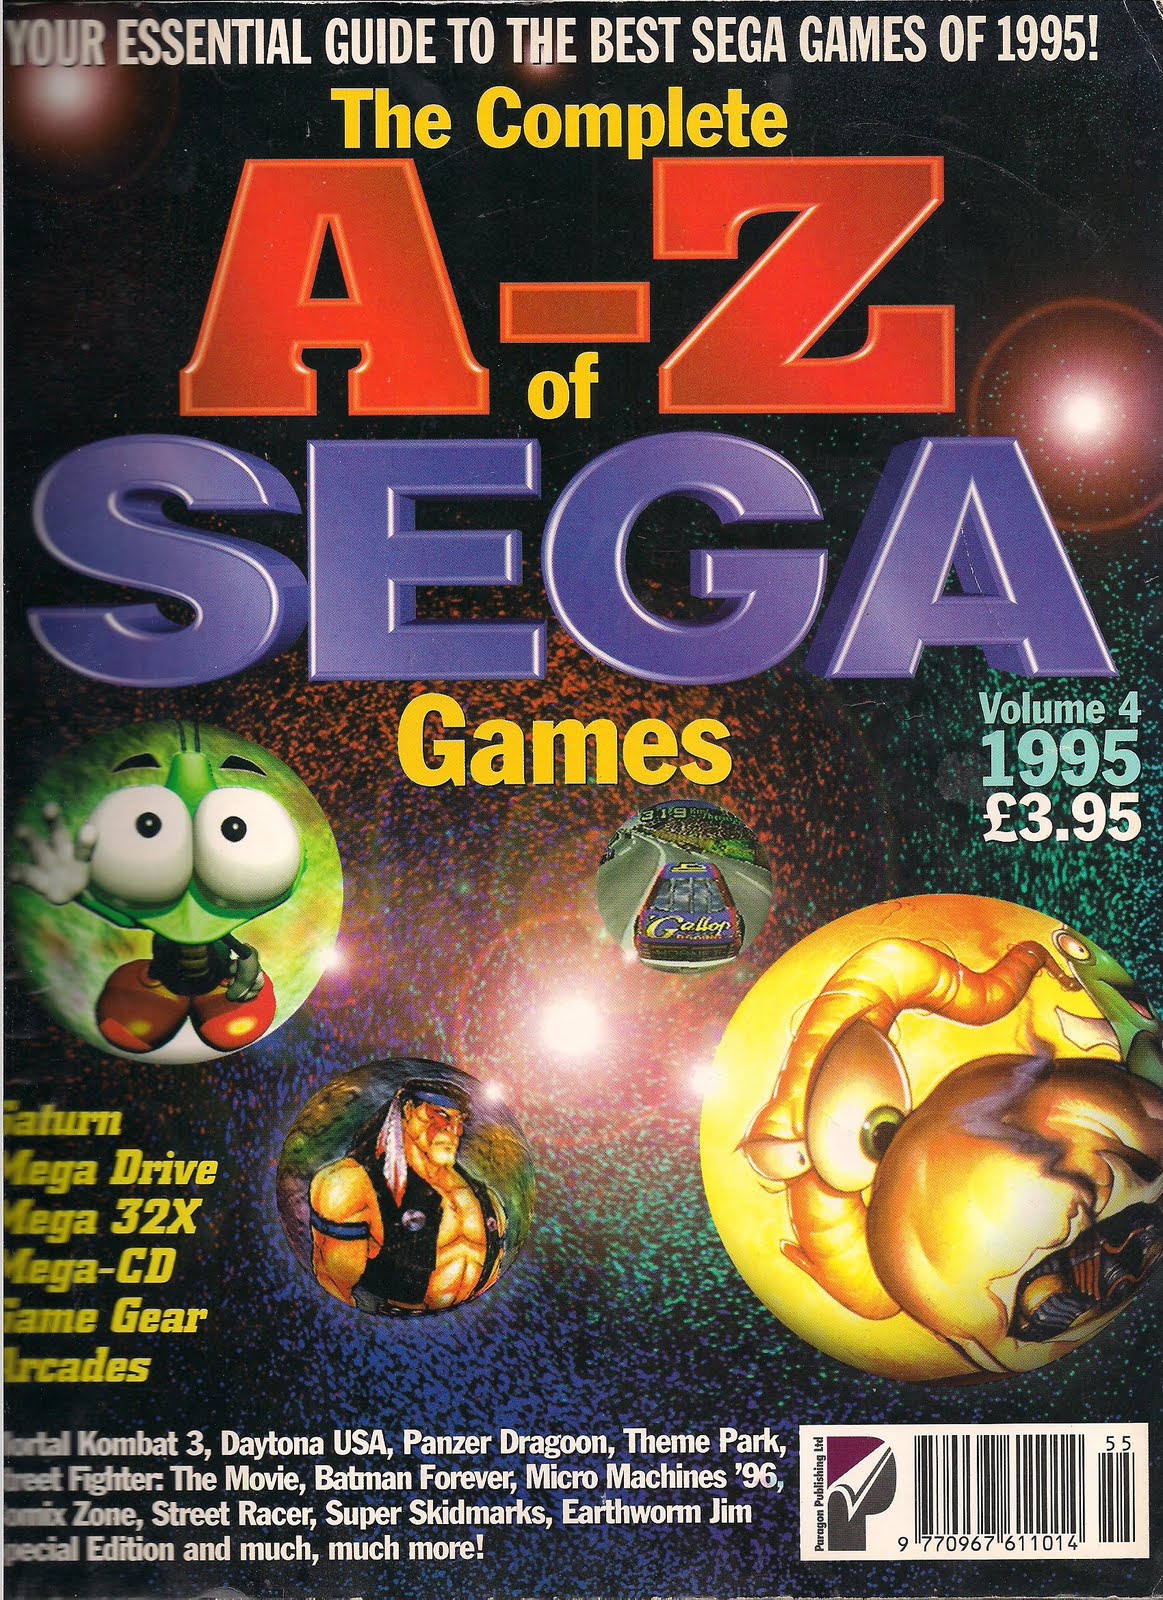 The Complete A-Z of Sega Games Volume 4 - Sega Retro